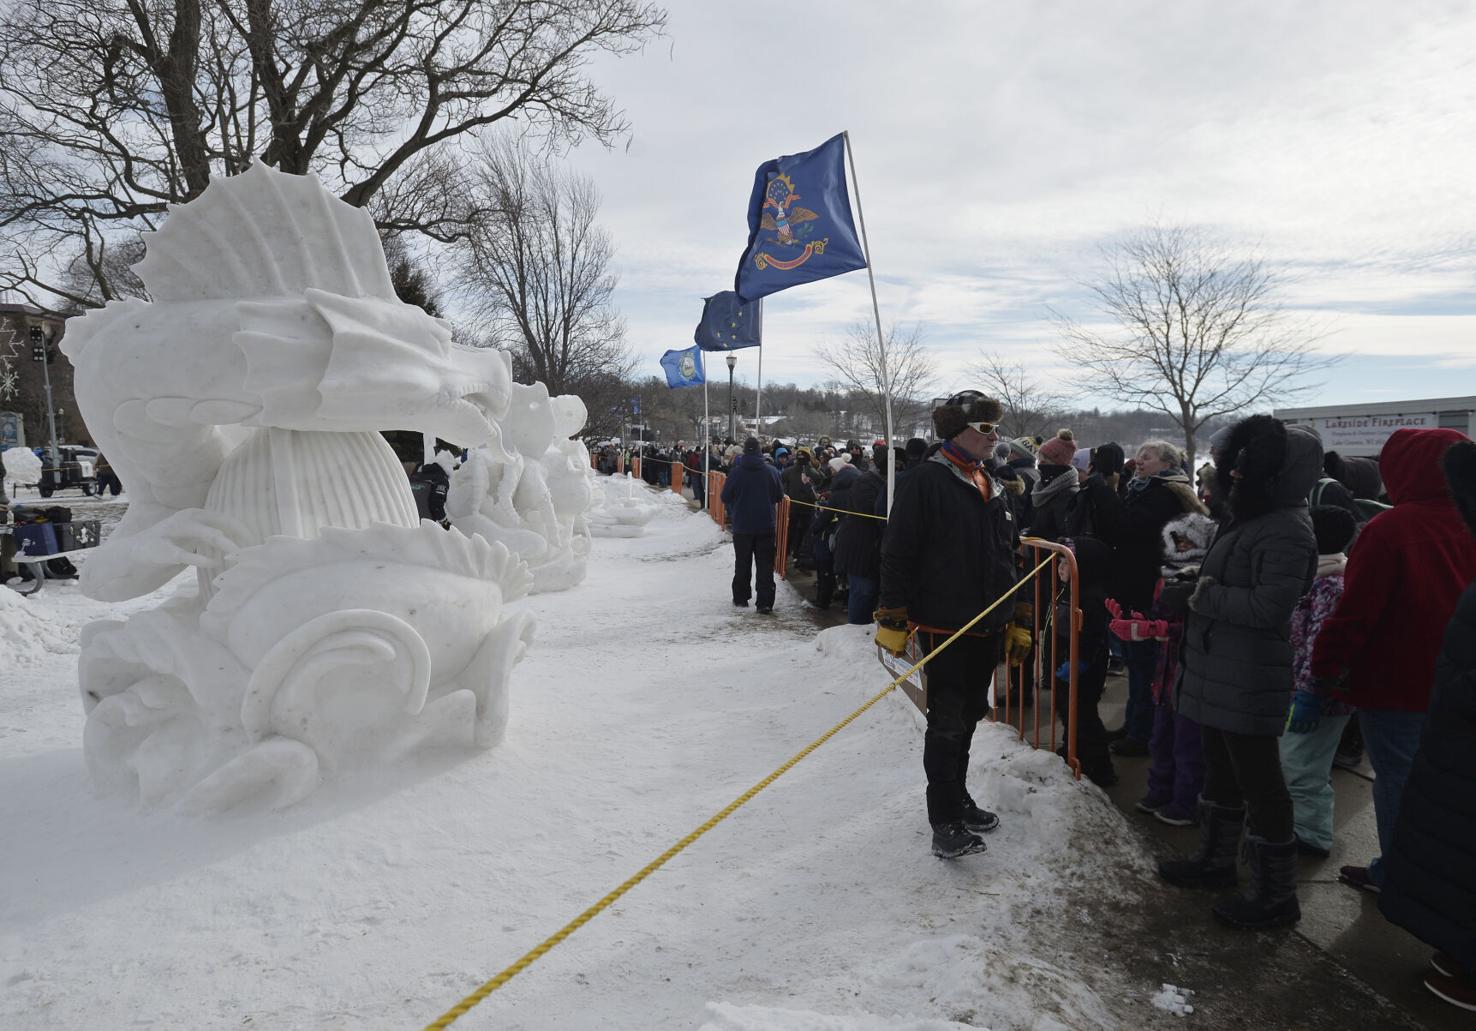 Snow sculptures draw a crowd to Lake Geneva